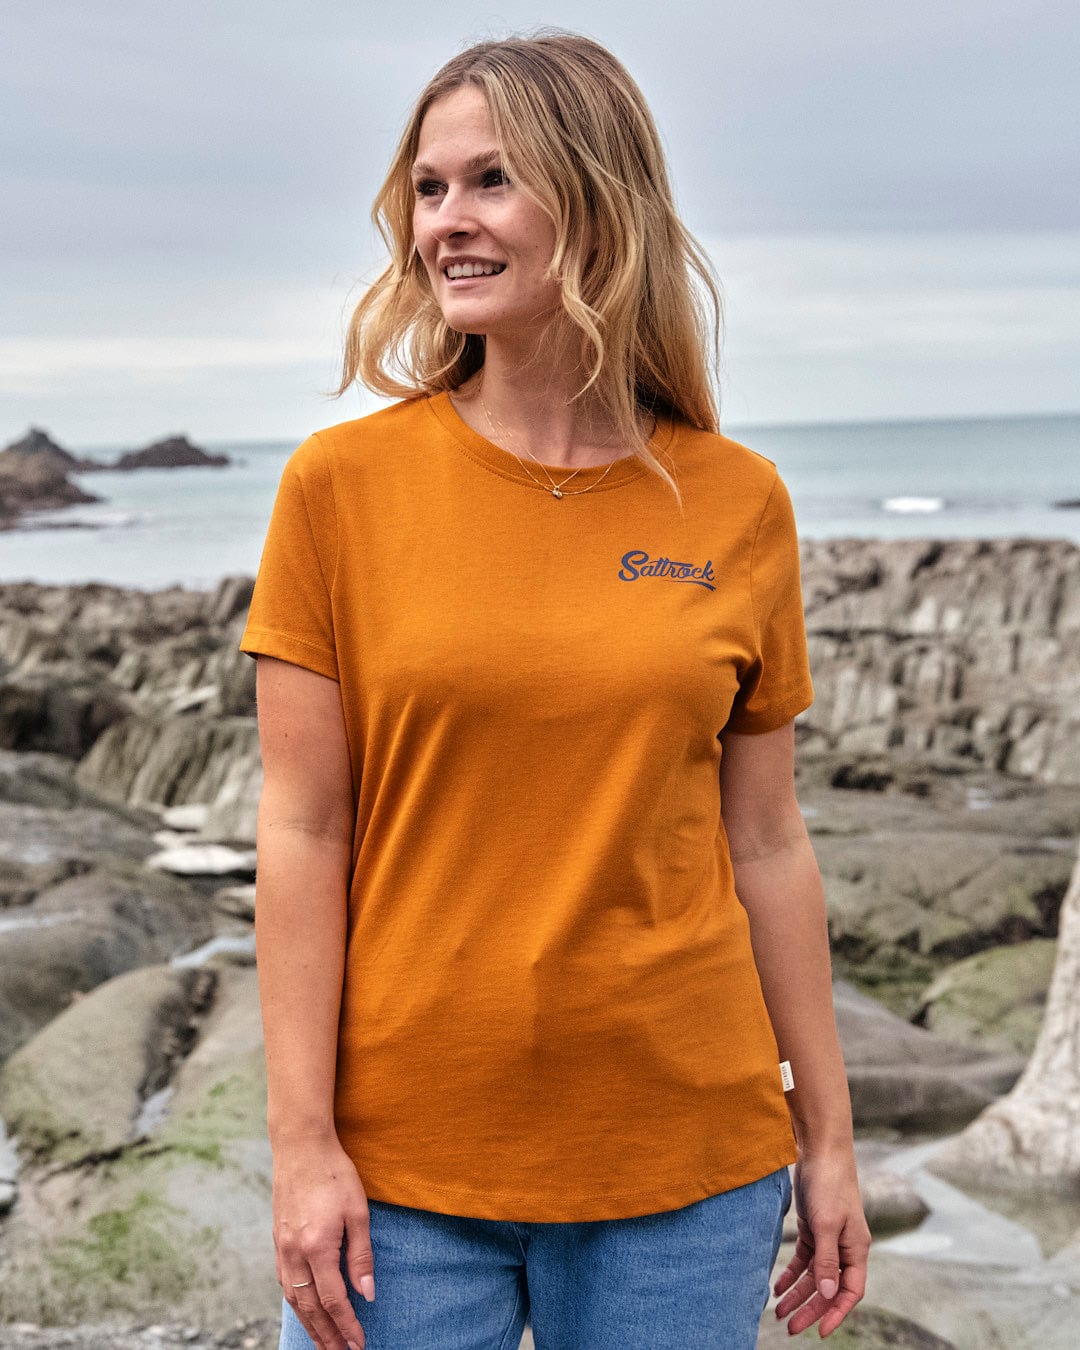 A woman wearing a lightweight fabric yellow t-shirt from the Saltrock brand, standing on a rocky beach.